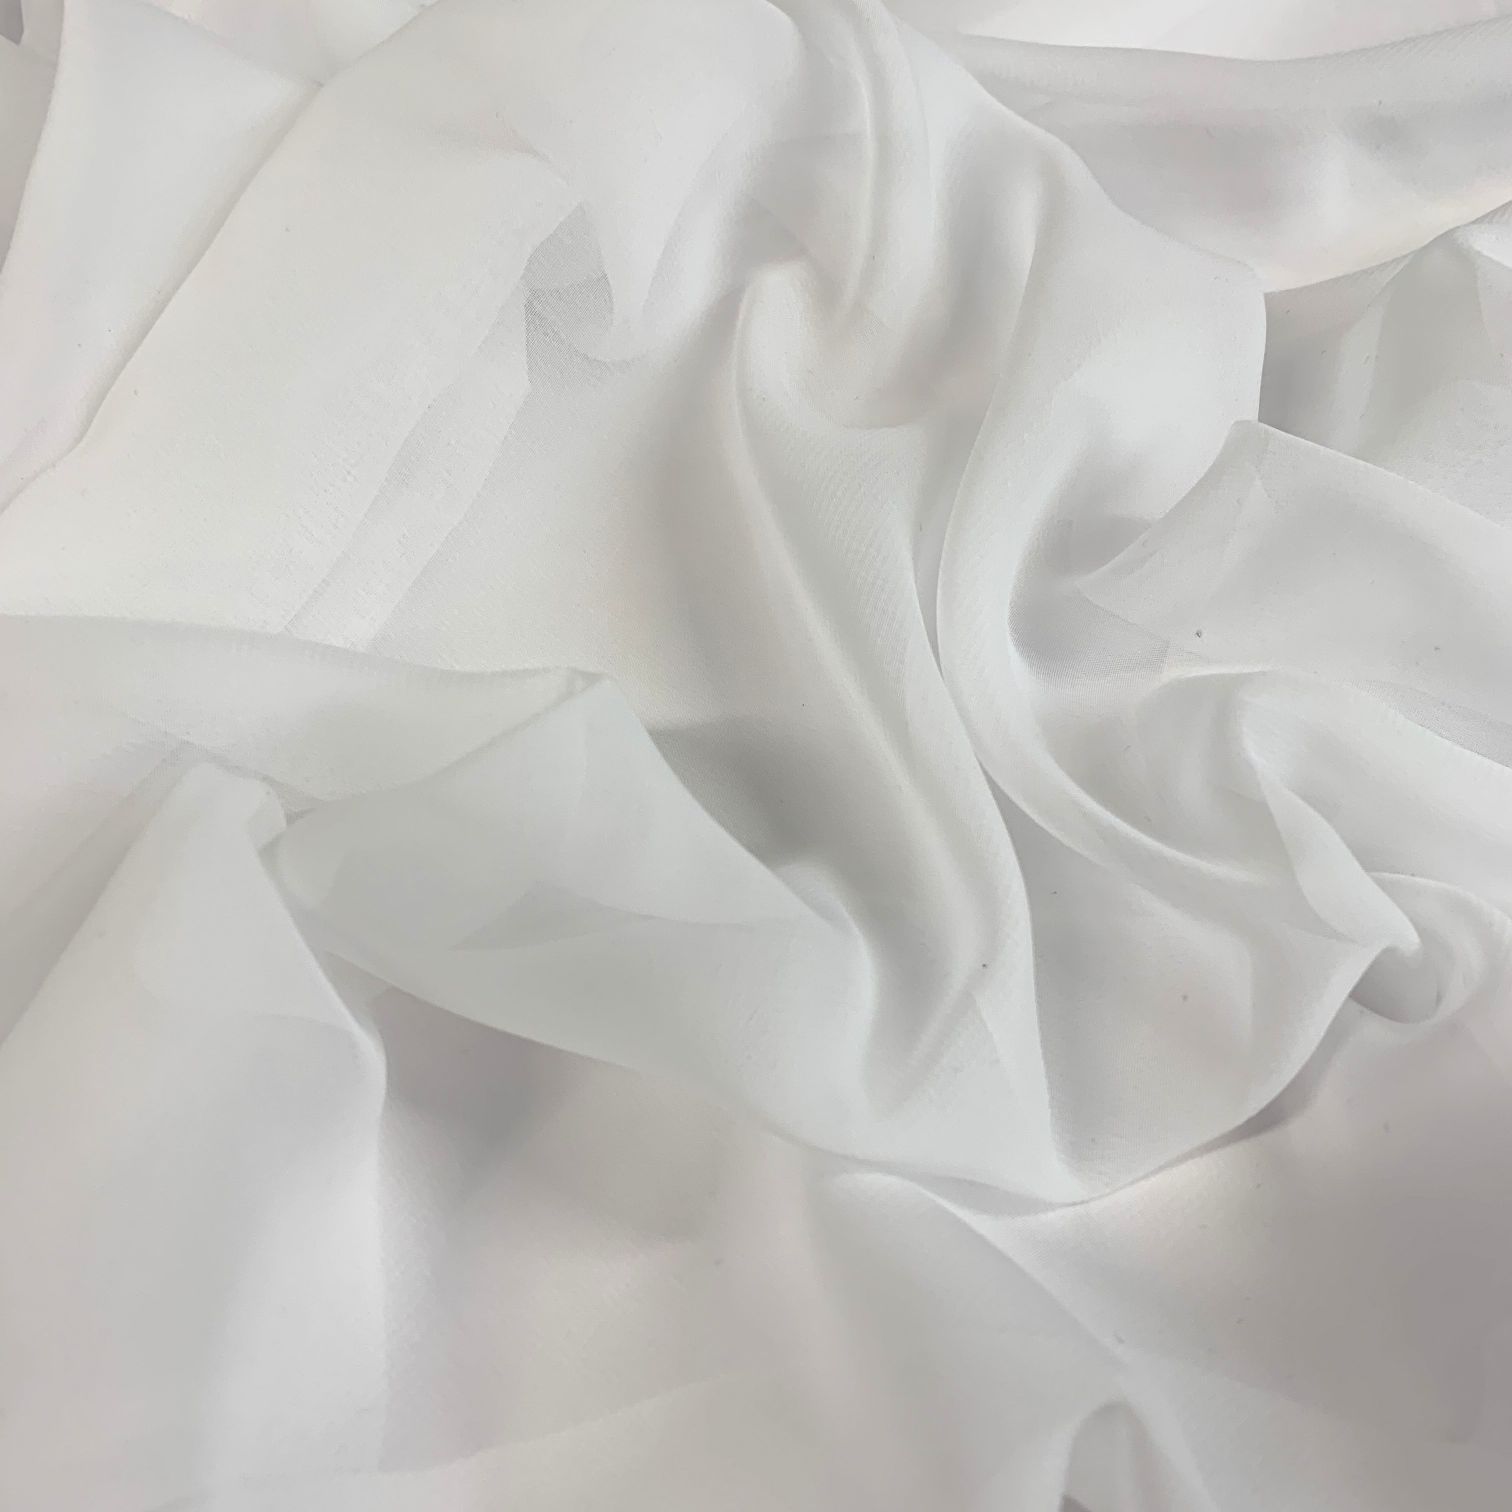 Black/White Speckled Silk Chiffon - Fabrics & Fabrics